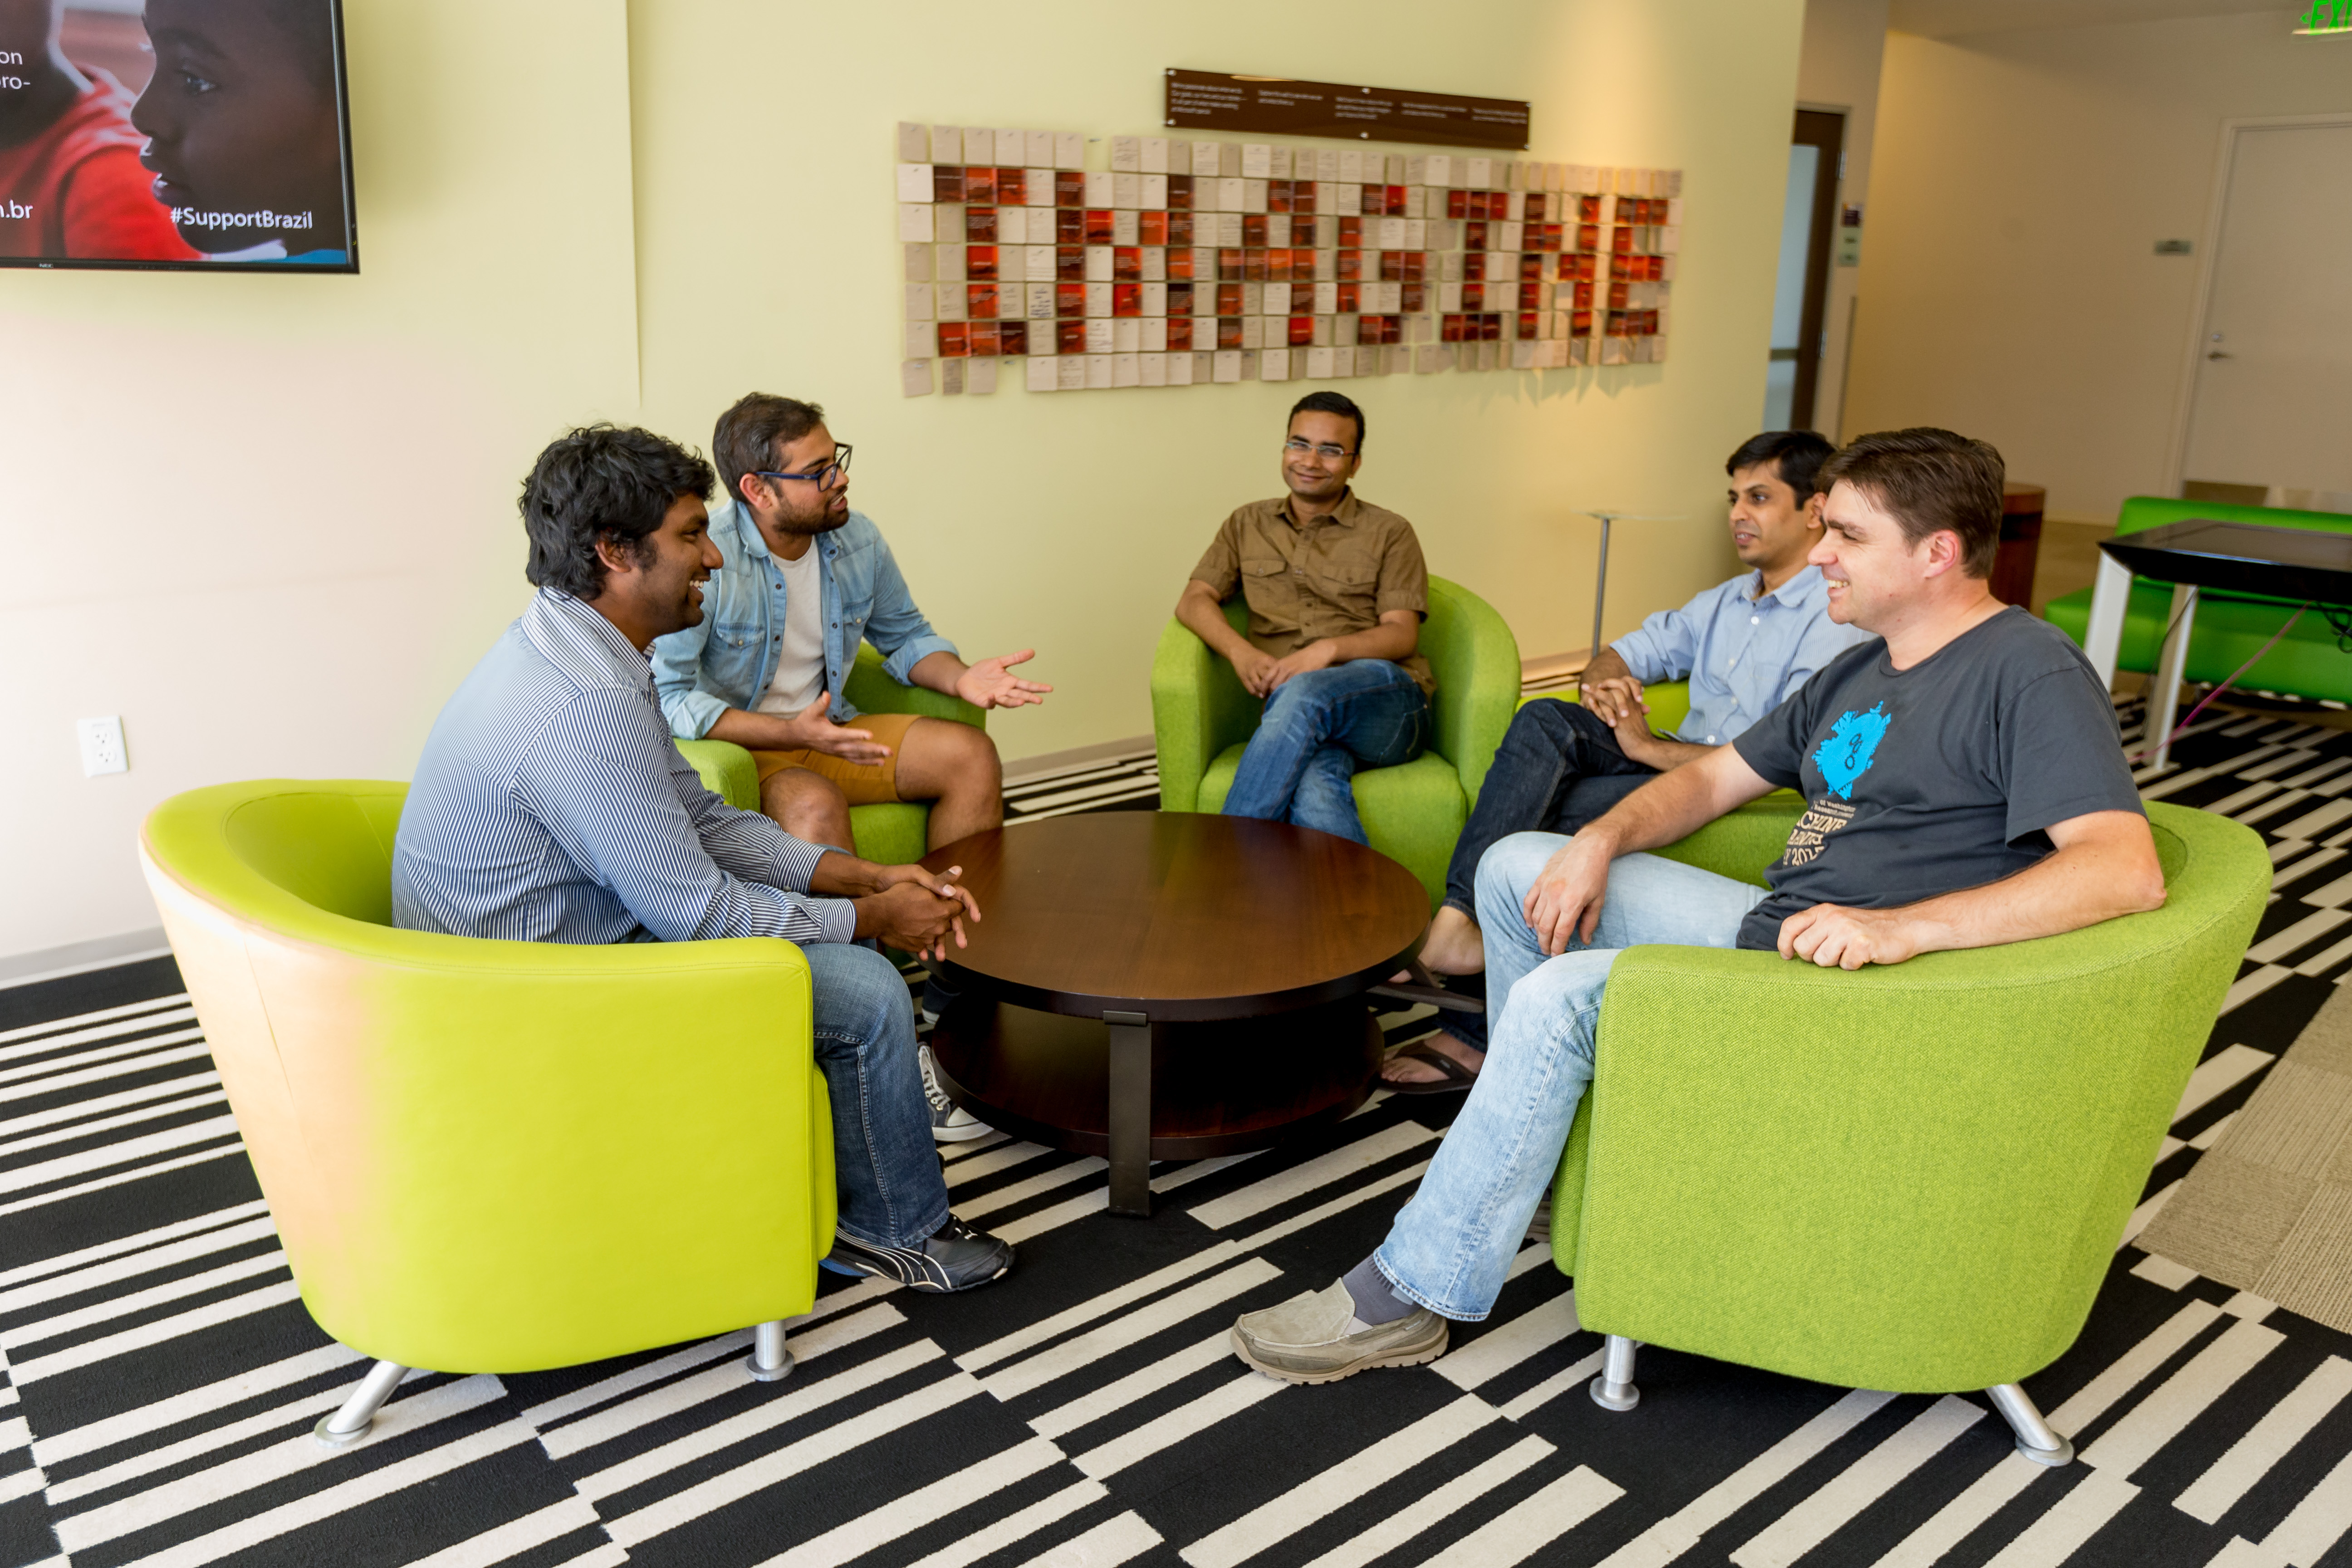 Microsoft Hackathon finalist Team Instafact (left to right)Srivatsava Darurui,  Rohit Paravastu, Rajeev Kumar, Deepak Zambre and Silviu Cucerzan at Bellevue Center on August 5, 2016. (Photography by Scott Eklund/Red Box Pictures)